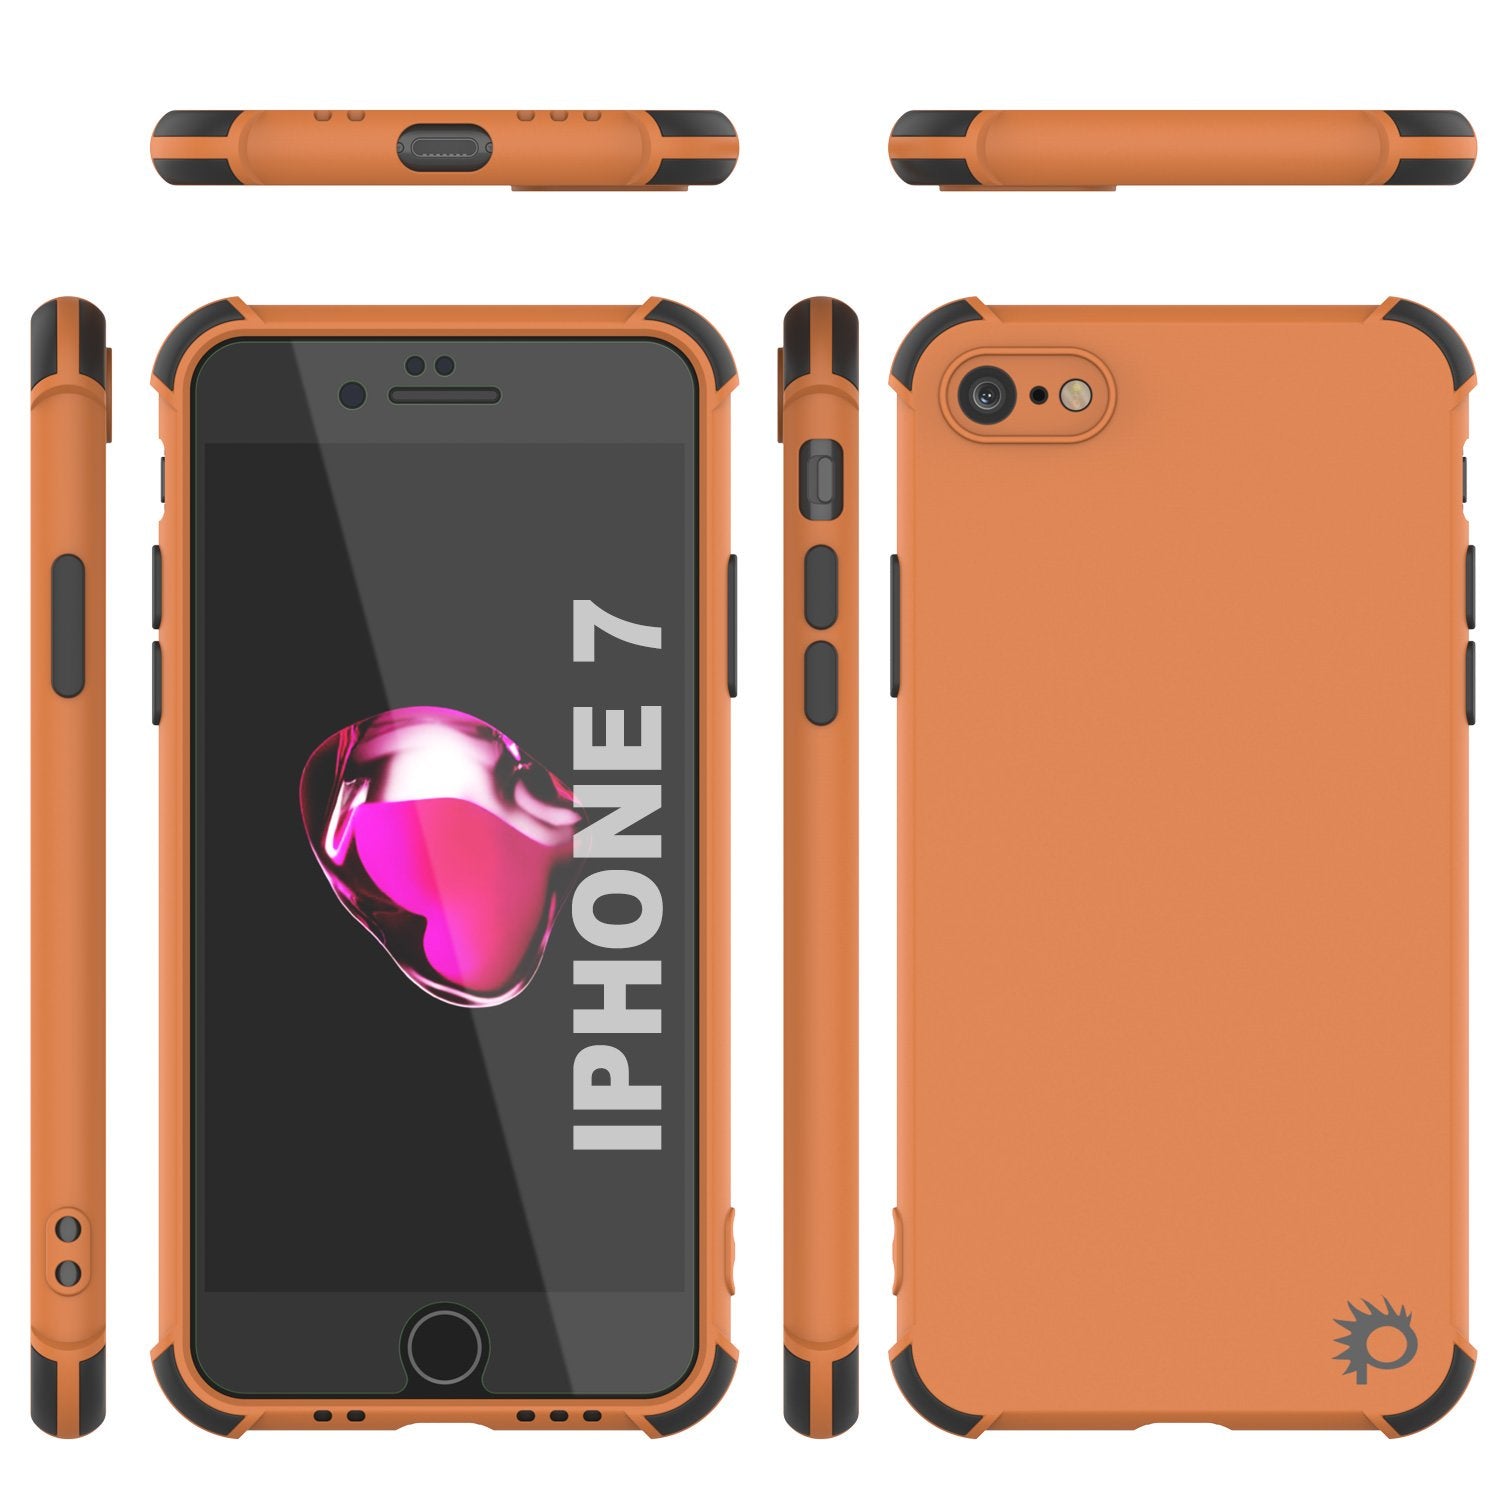 Punkcase Protective & Lightweight TPU Case [Sunshine Series] for iPhone 7 [Orange]